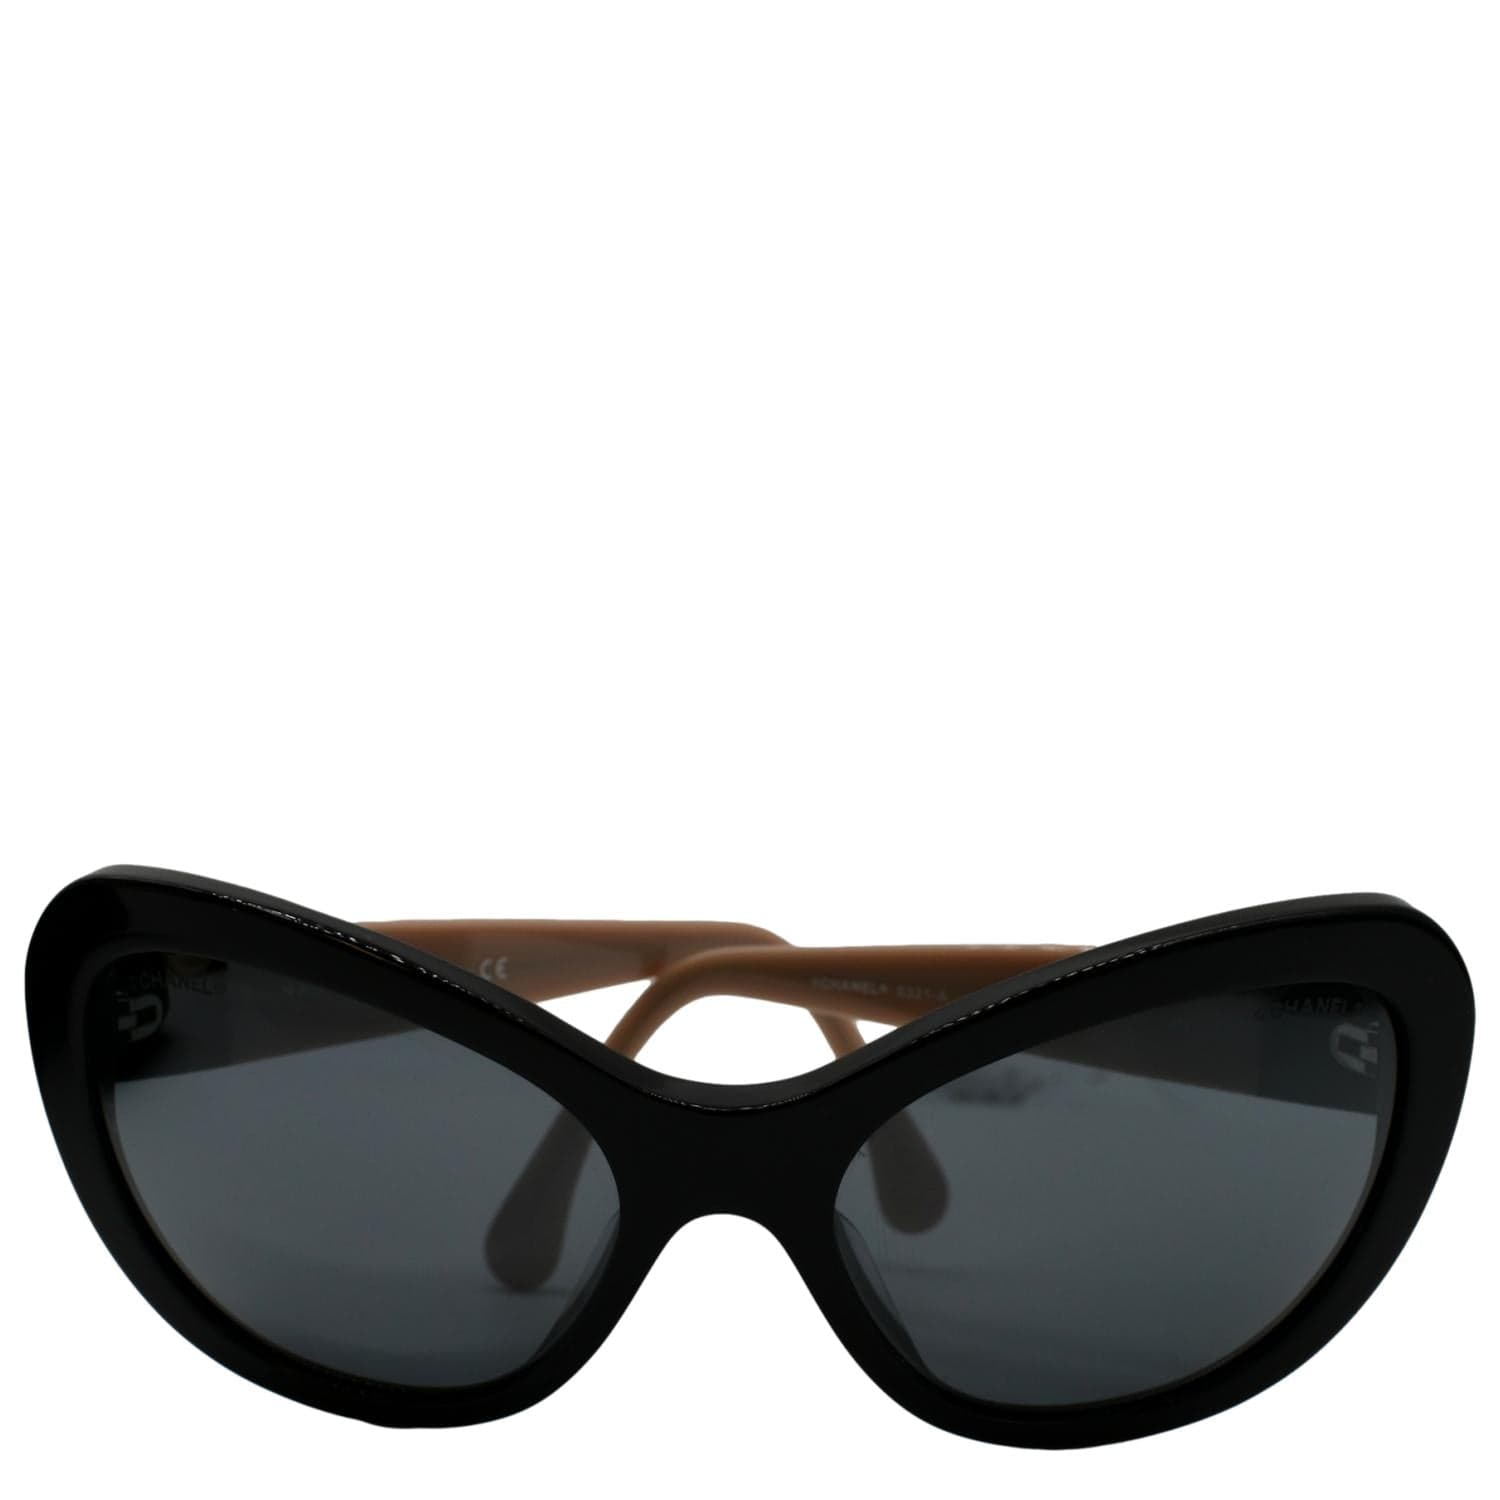 Chanel Oval Sunglasses in Gray